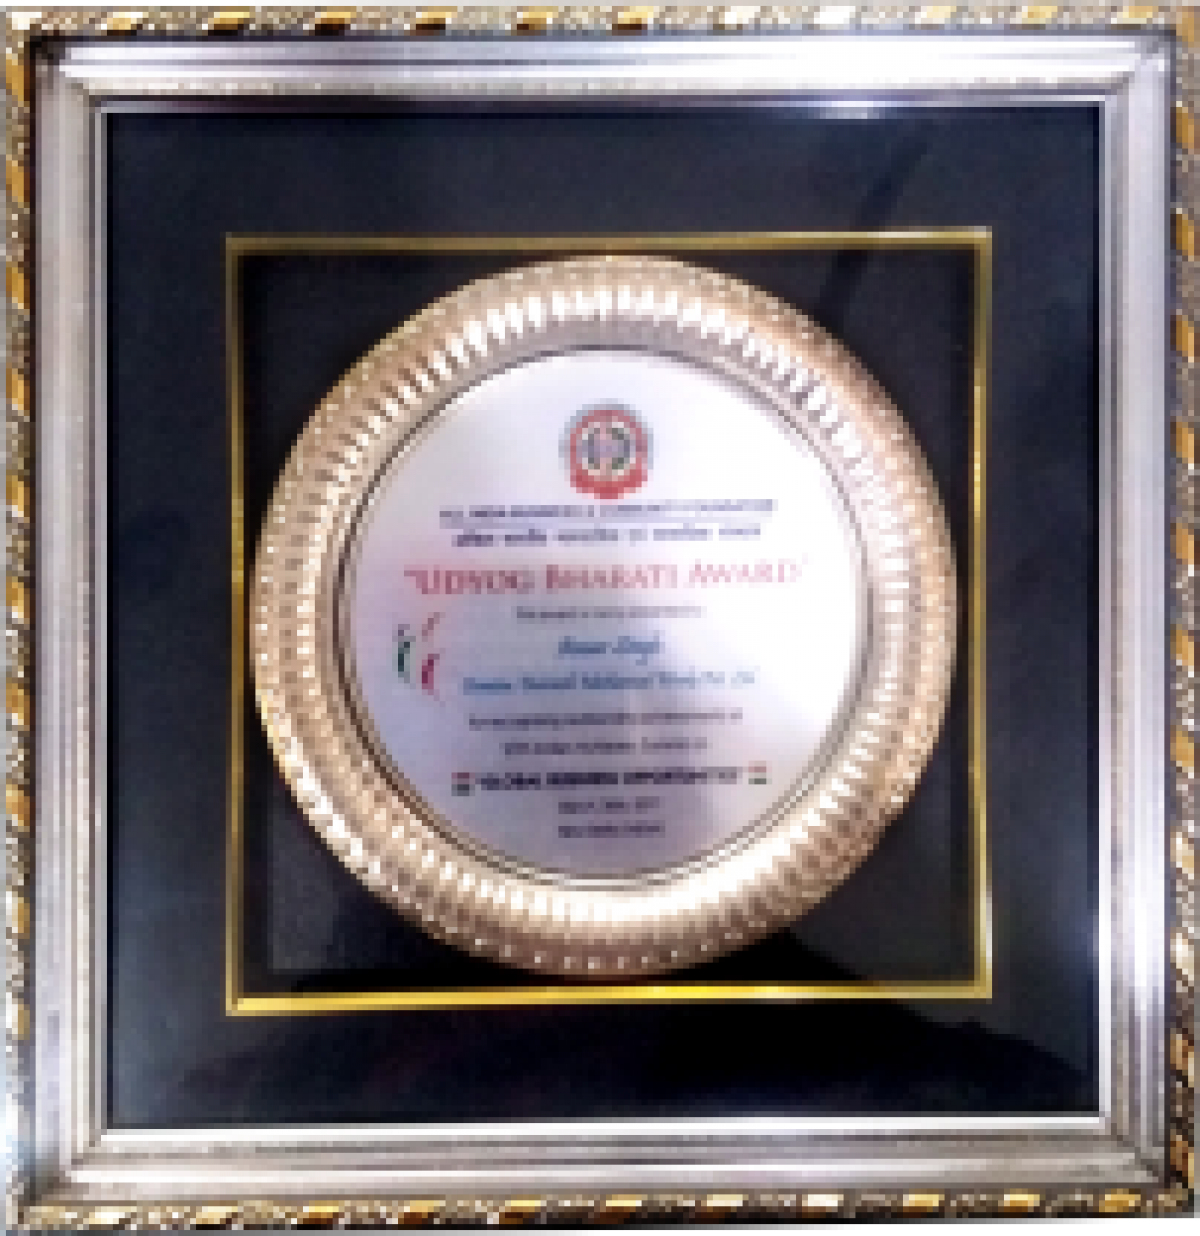 Dasmesh - Udyog Bharti Award  2011 Winner